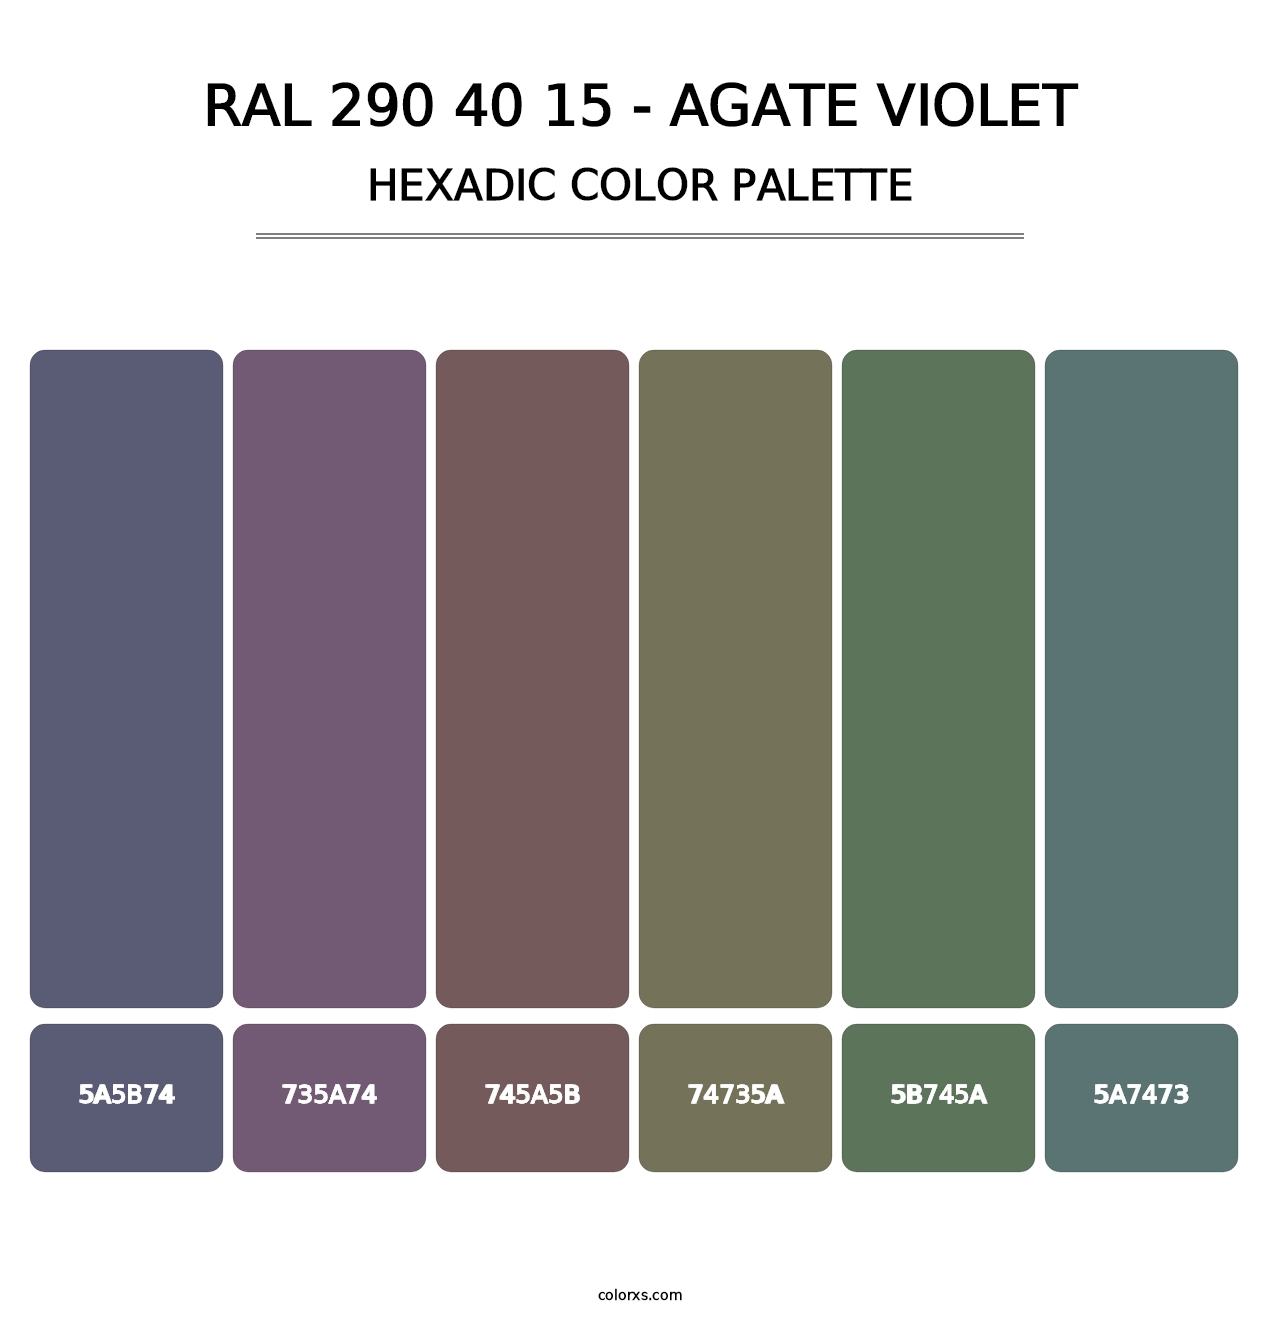 RAL 290 40 15 - Agate Violet - Hexadic Color Palette